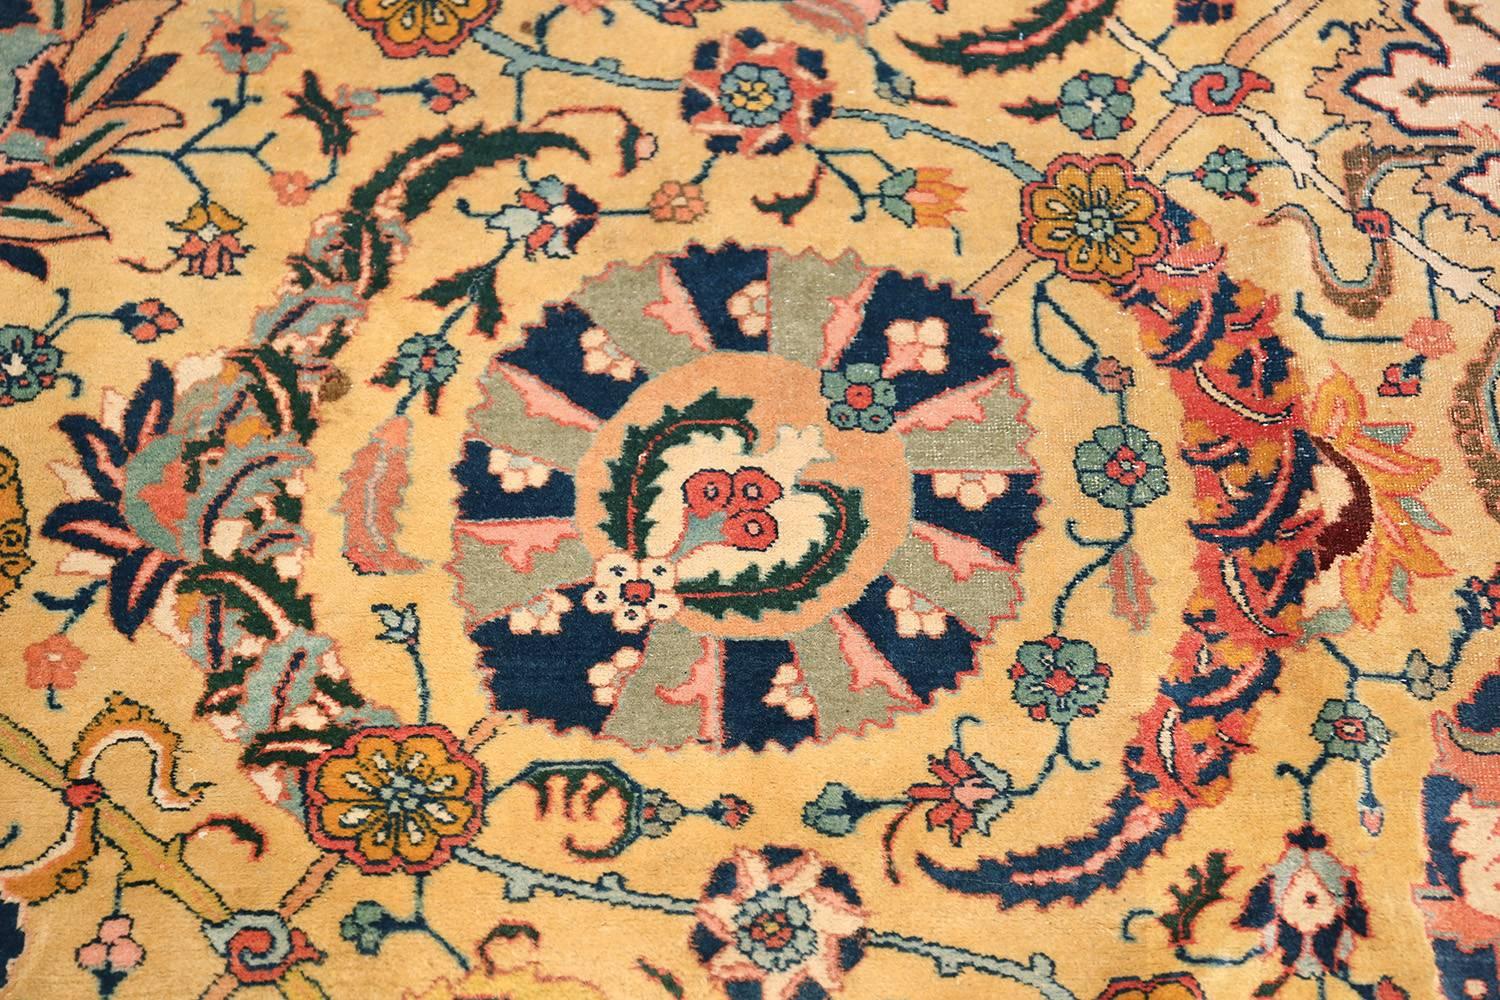 Antique Persian Sickle Leaf Tabriz Rug. Size: 9 ft x 12 ft (2.74 m x 3.66 m) 1